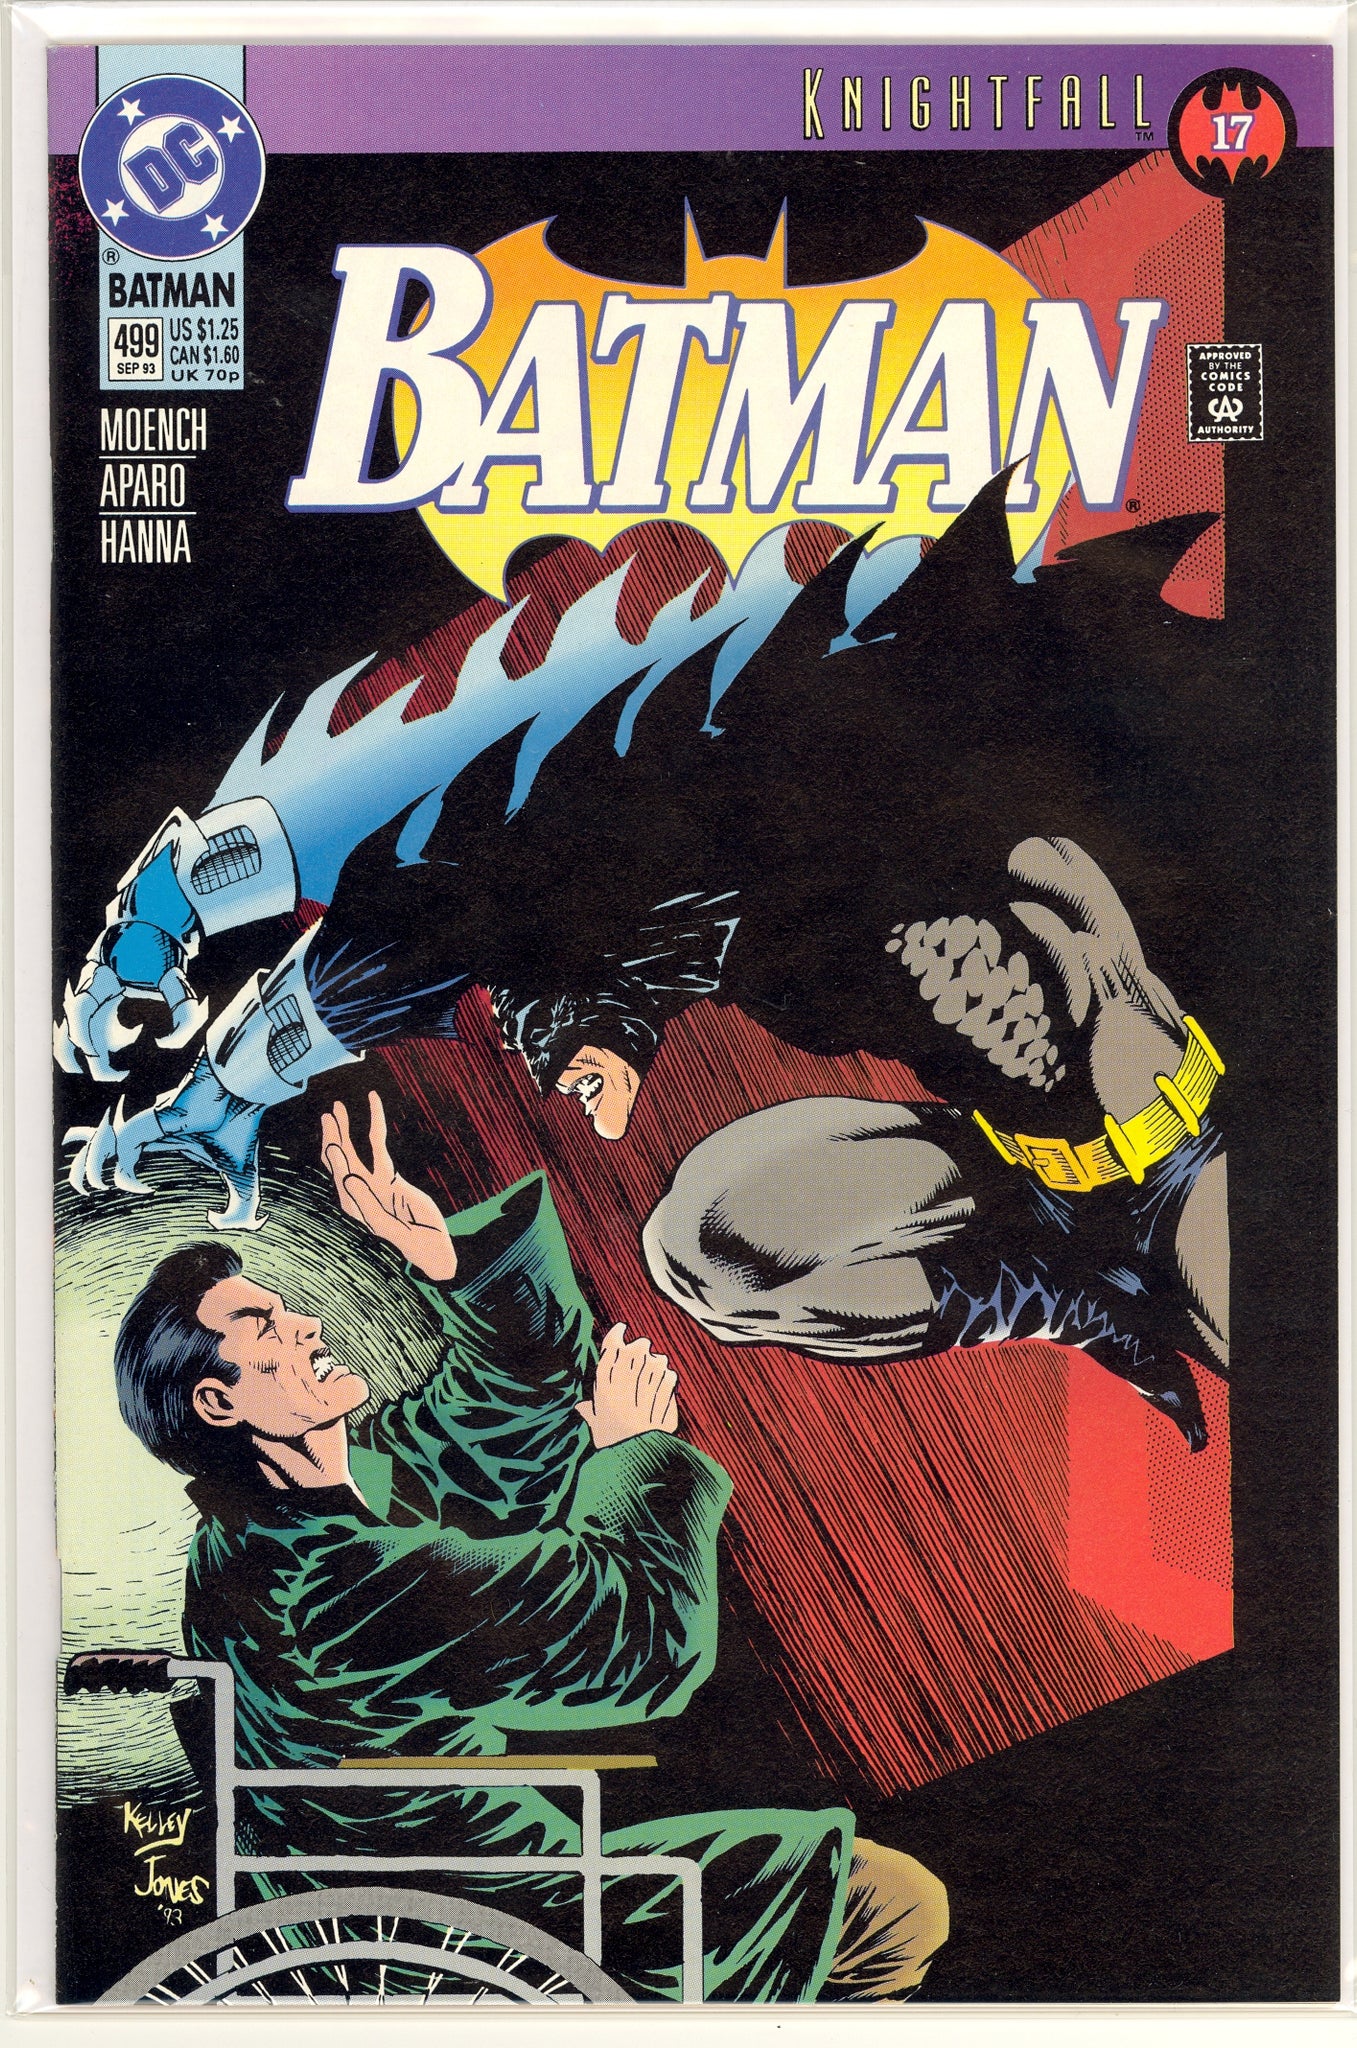 Batman #499 (1993) Knightfall part 17